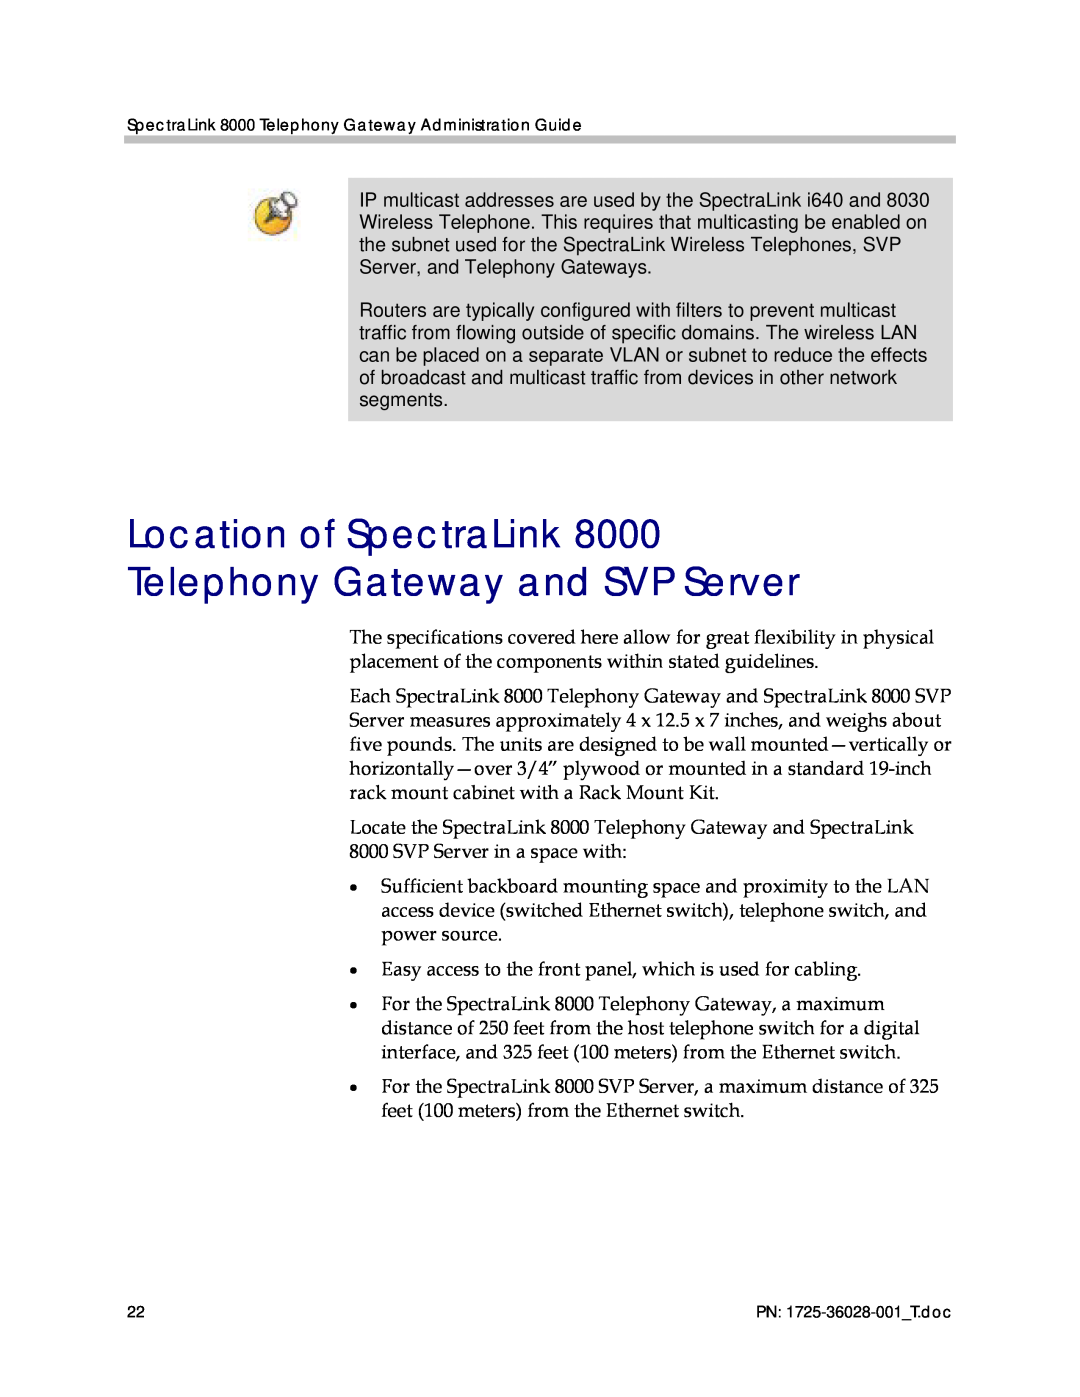 Polycom 1725-36028-001 manual Location of SpectraLink 8000 Telephony Gateway and SVP Server 